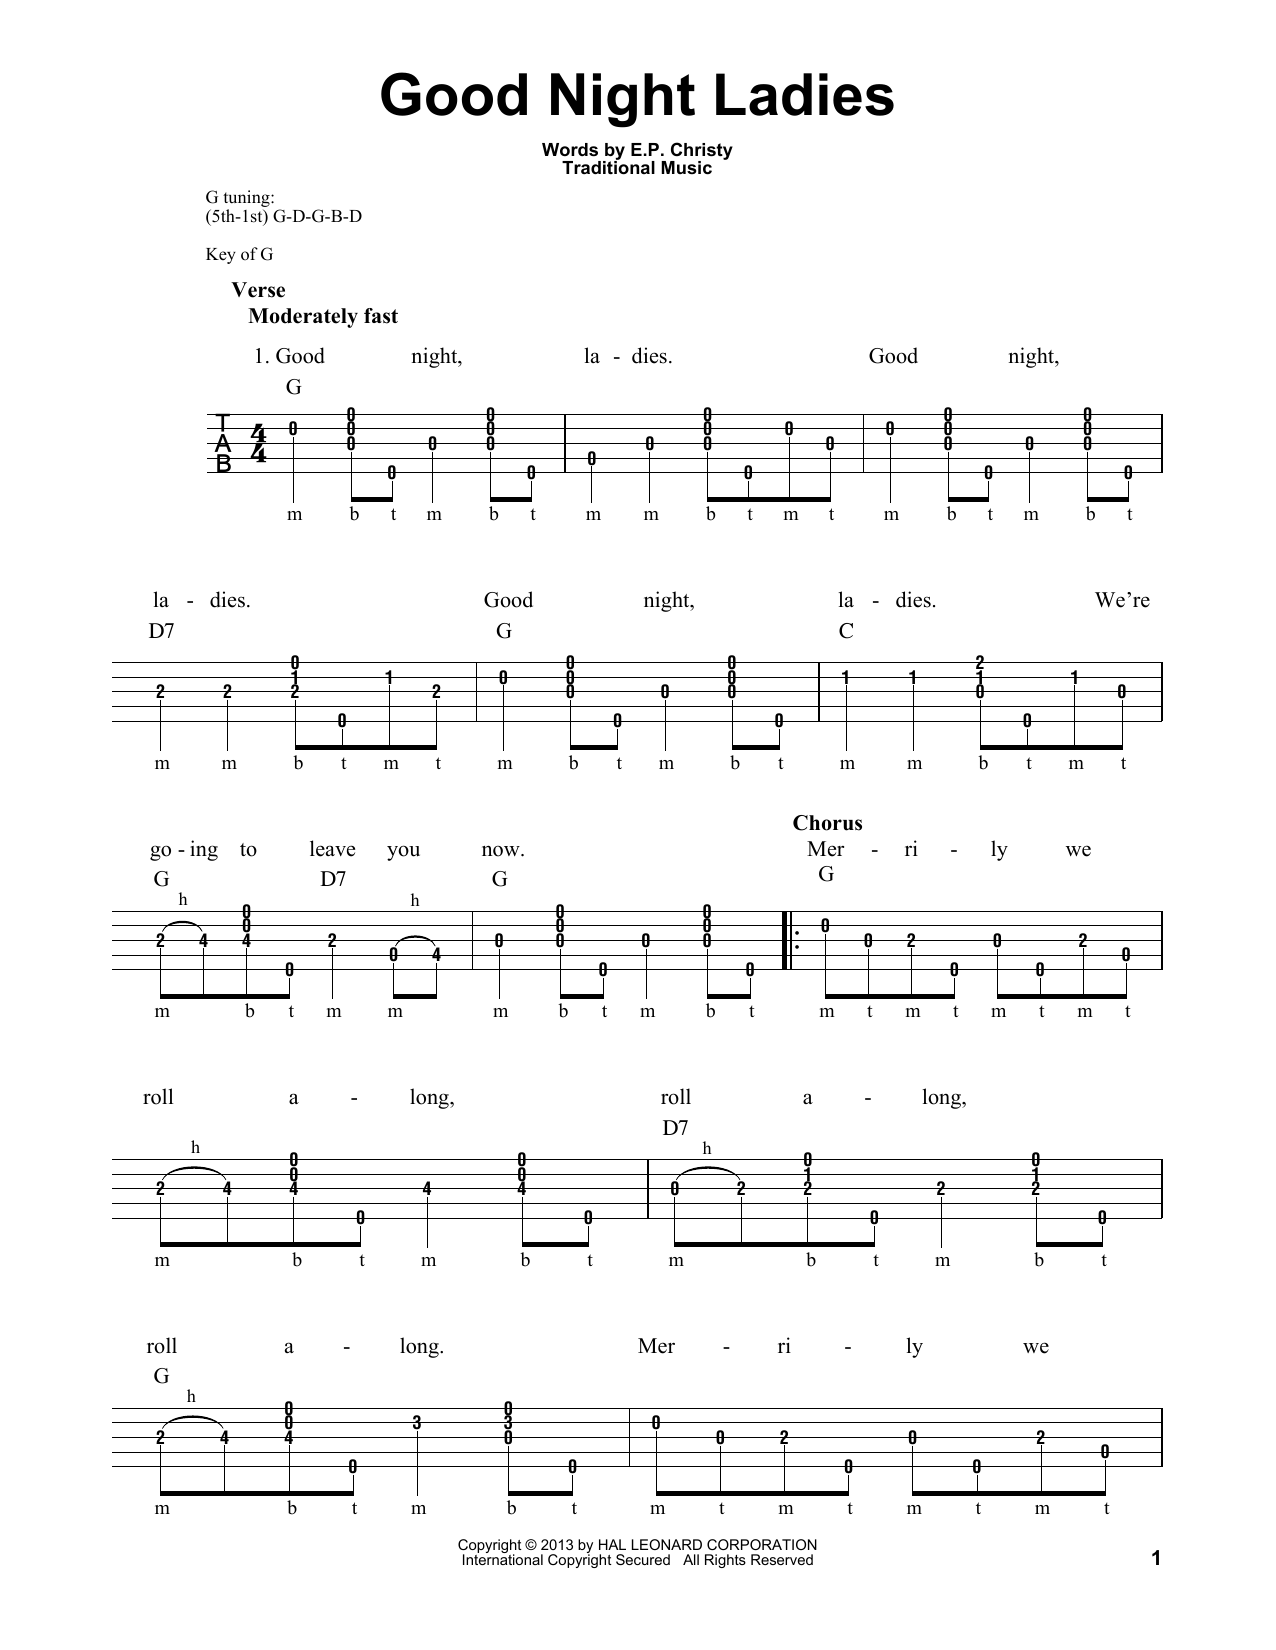 E.P. Christy Good Night Ladies Sheet Music Notes & Chords for Banjo - Download or Print PDF